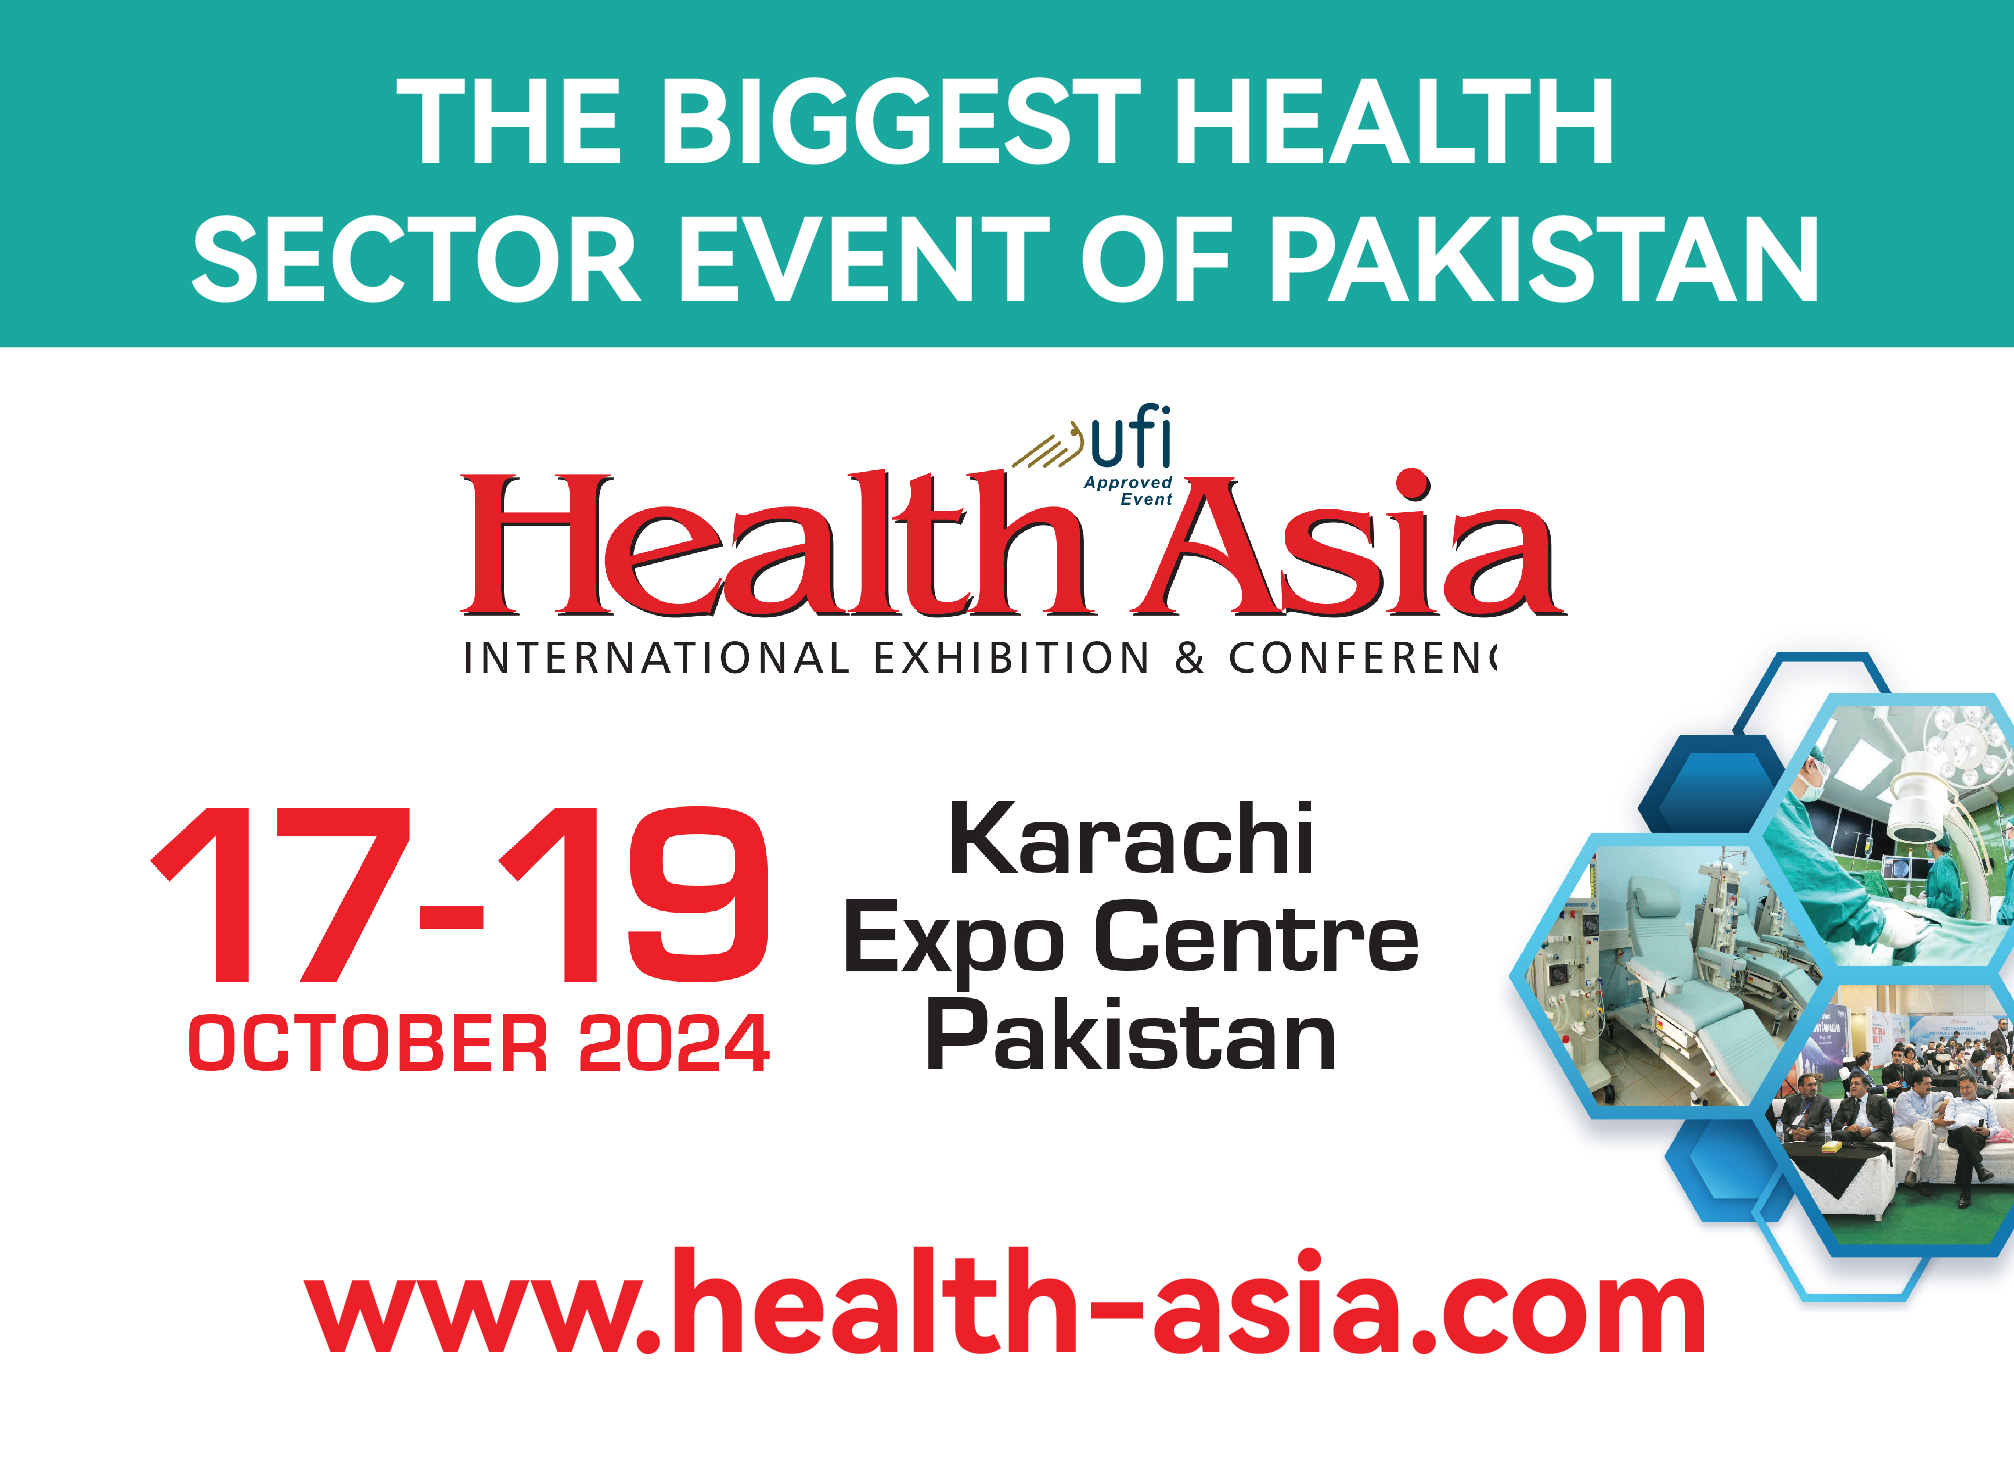 Health Asia International Exhibition